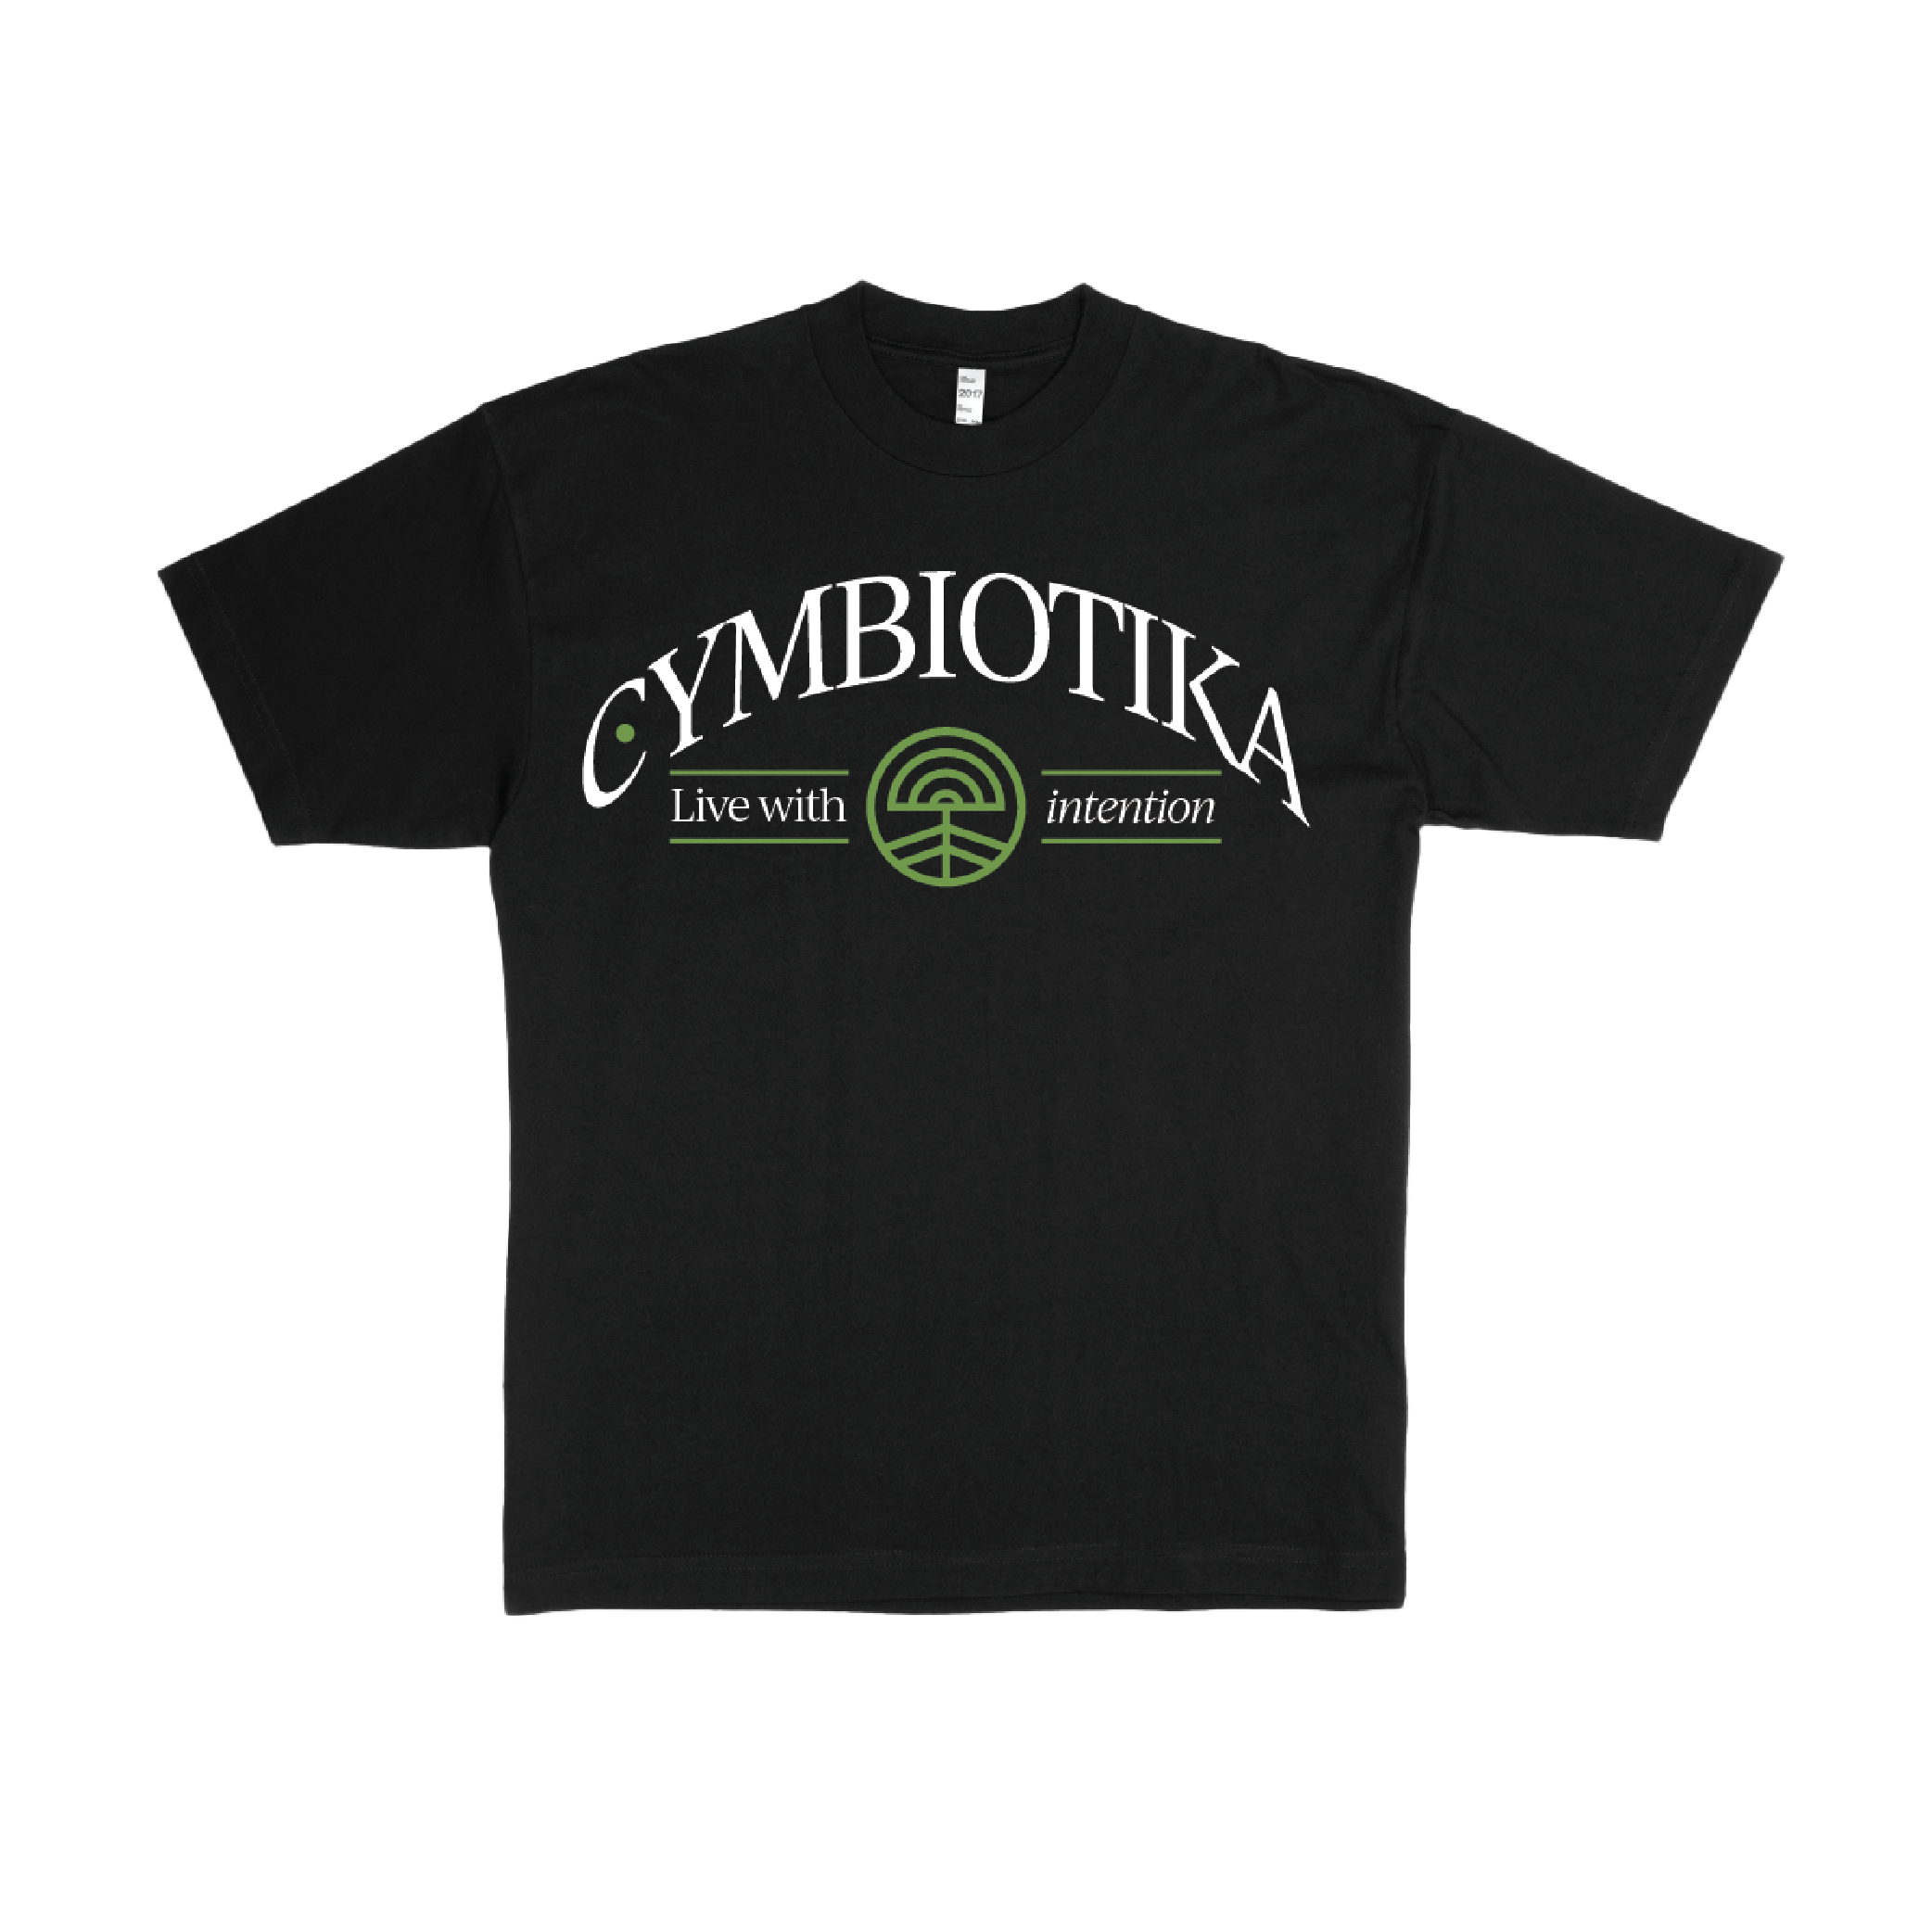 Premium Cymbiotika Branded Unisex University Style T-shirt